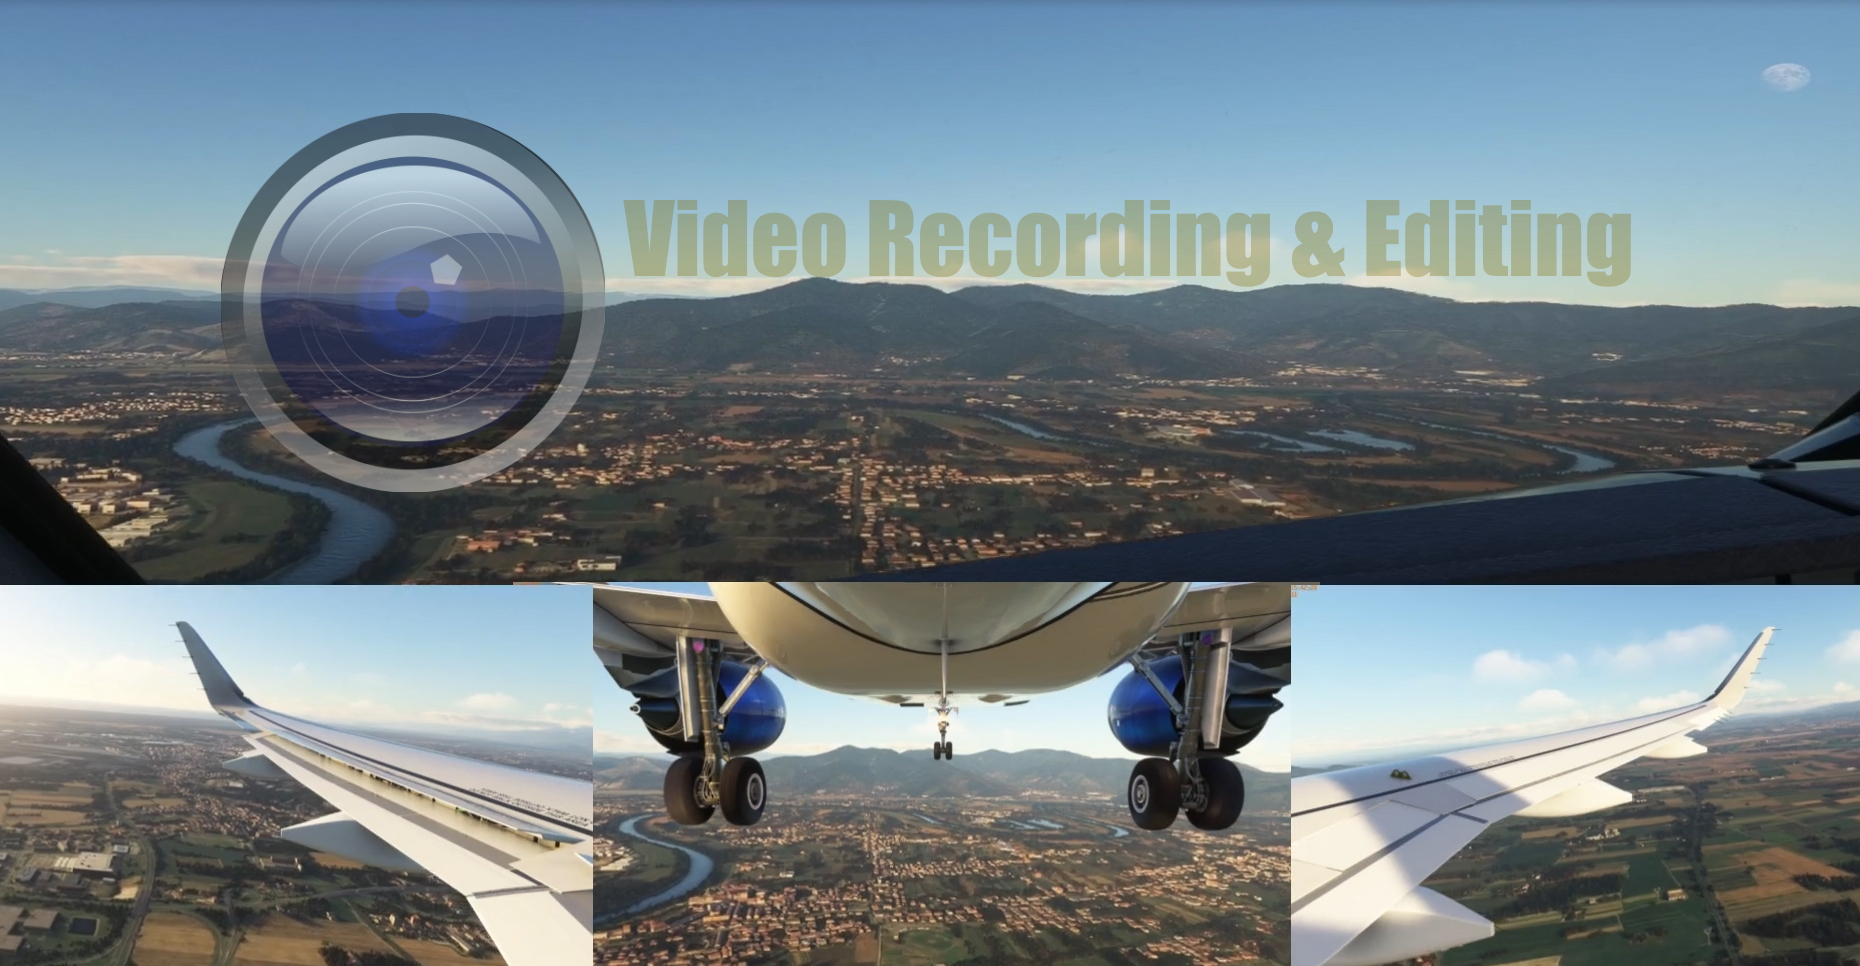 Video Recording & Editing